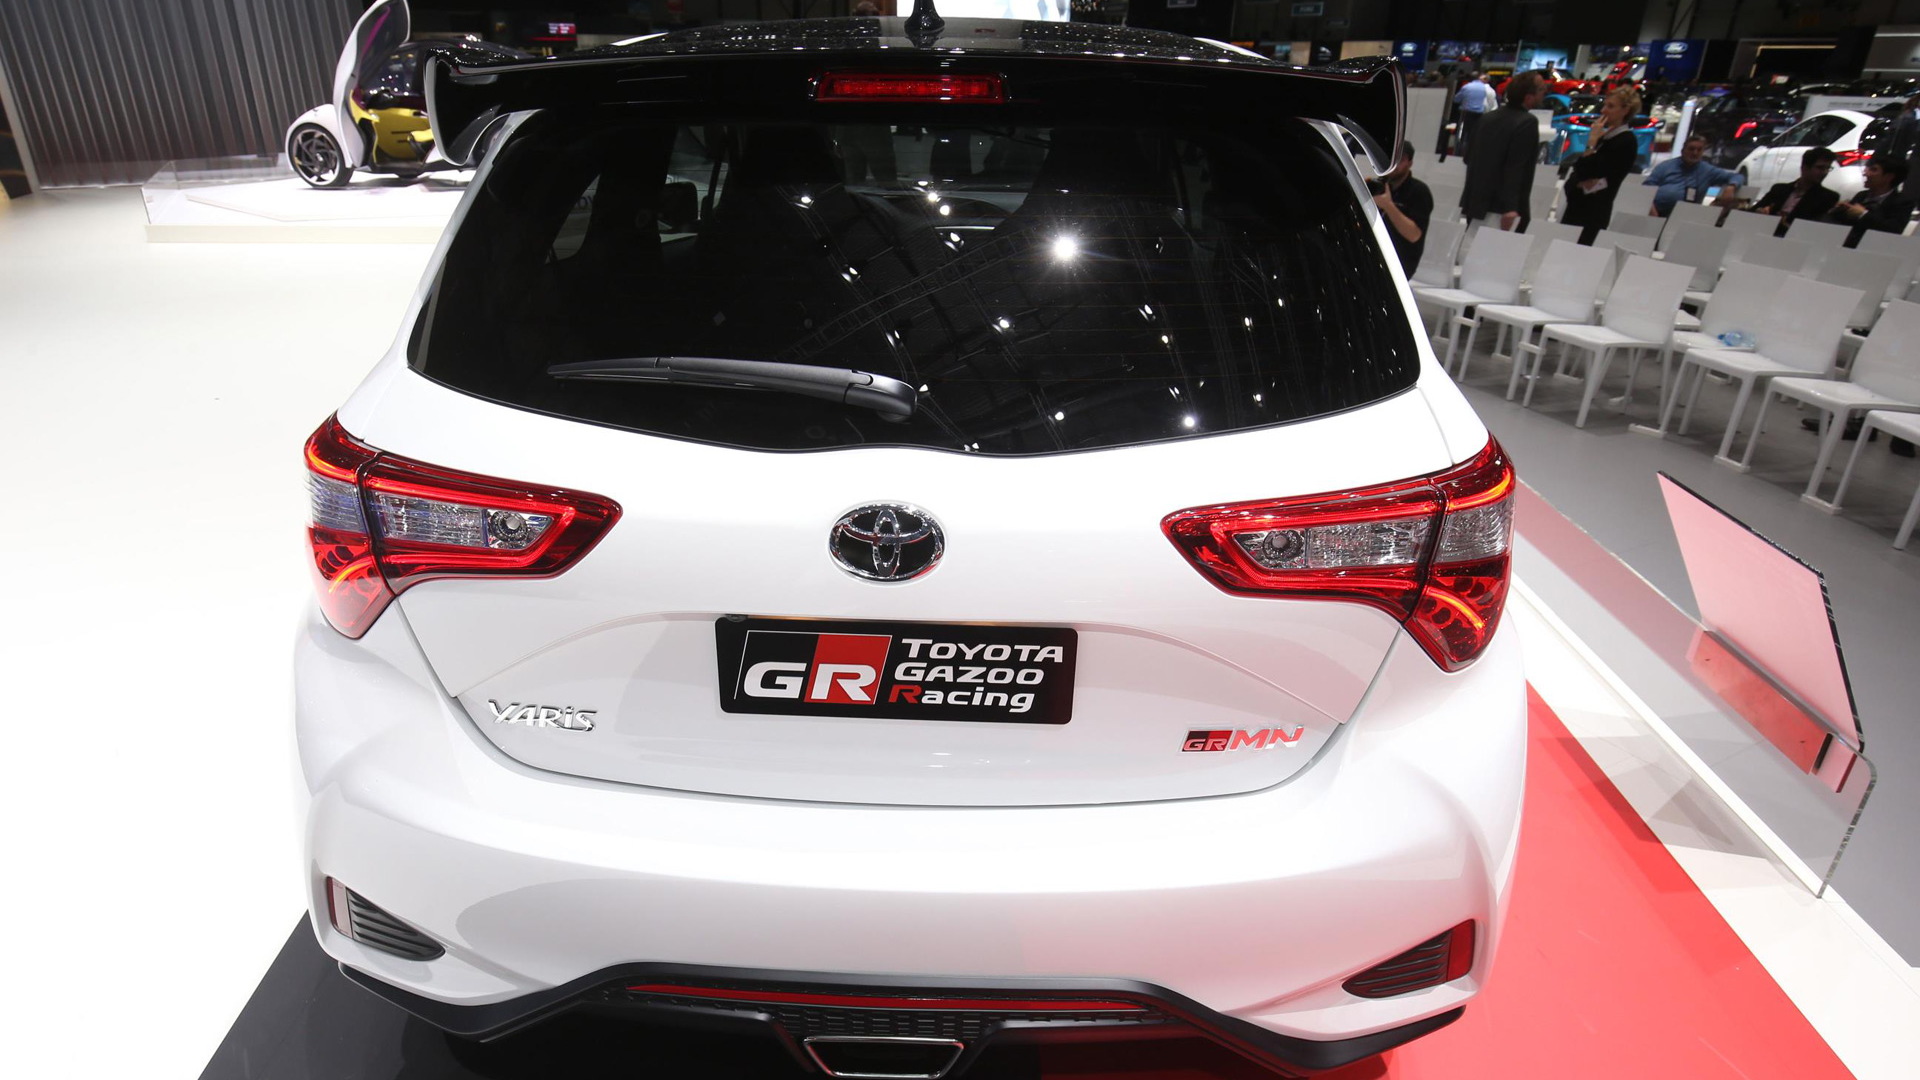 2017 Toyota Yaris GRMN, 2017 Geneva auto show